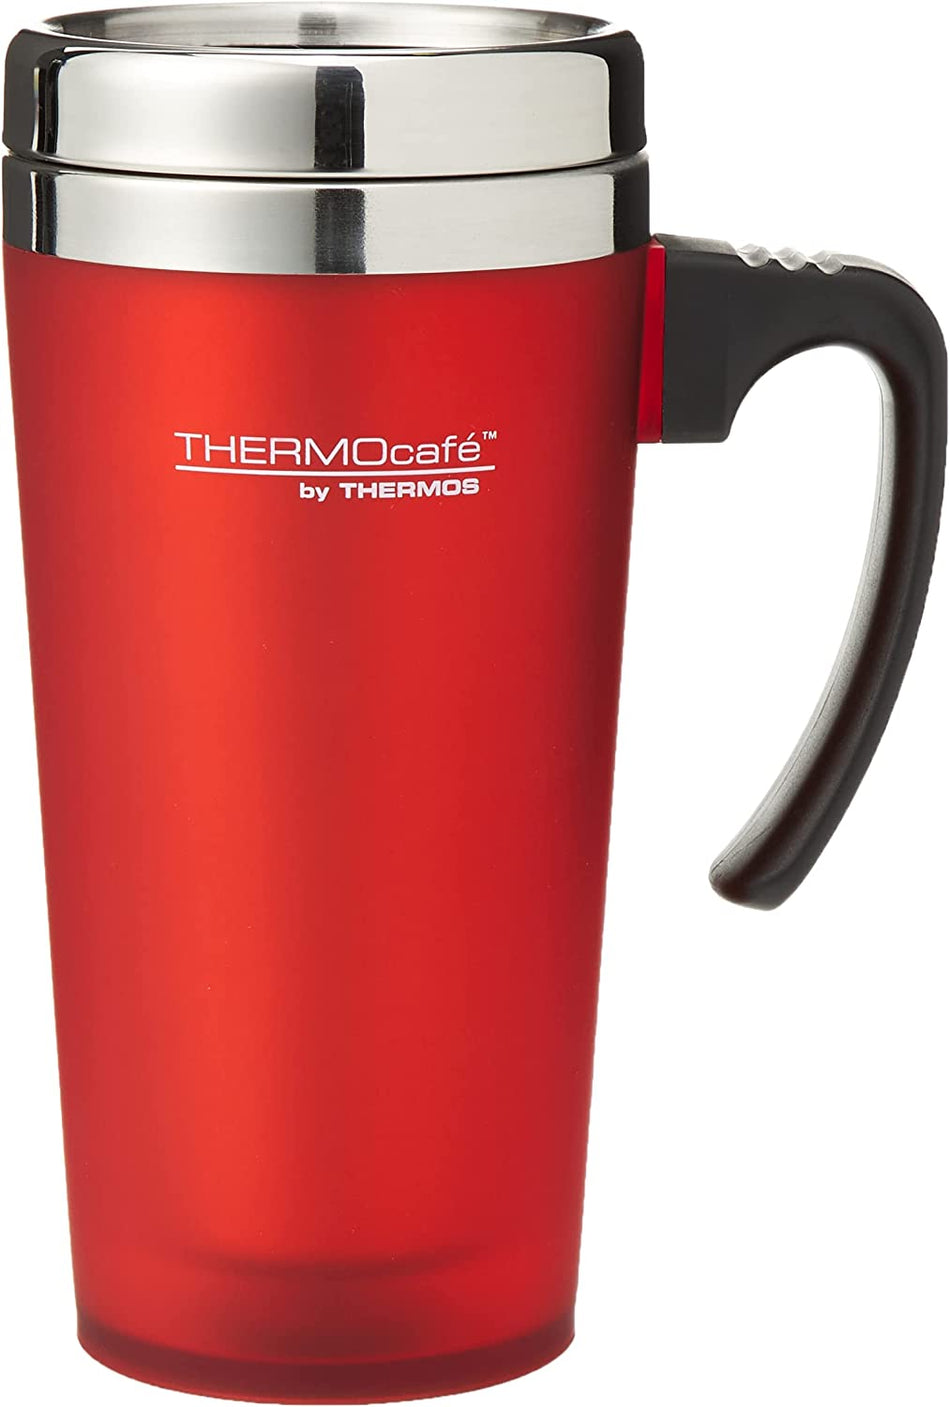 Thermocafe Travel Mug Red